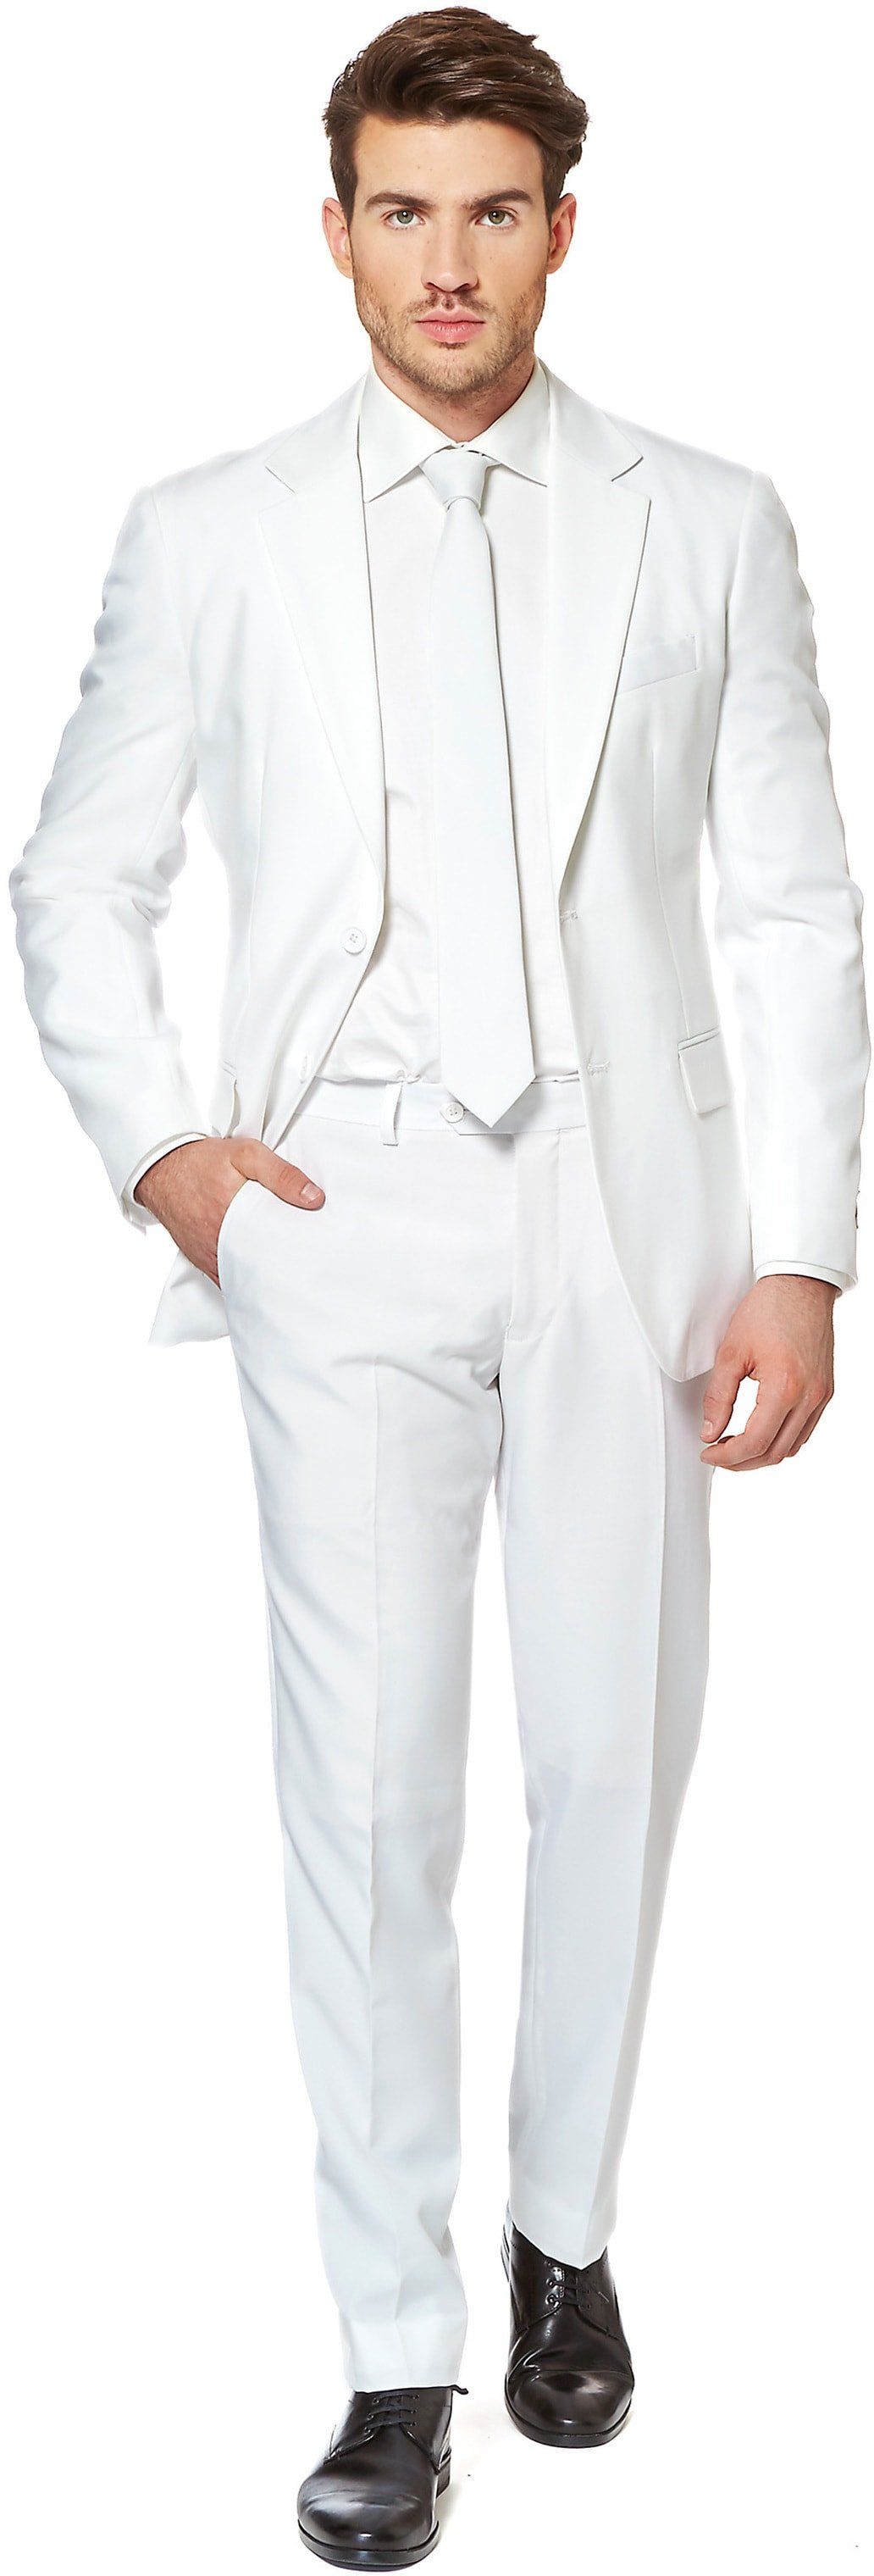 OppoSuits Costume de chevalier blanc Blanc taille 60